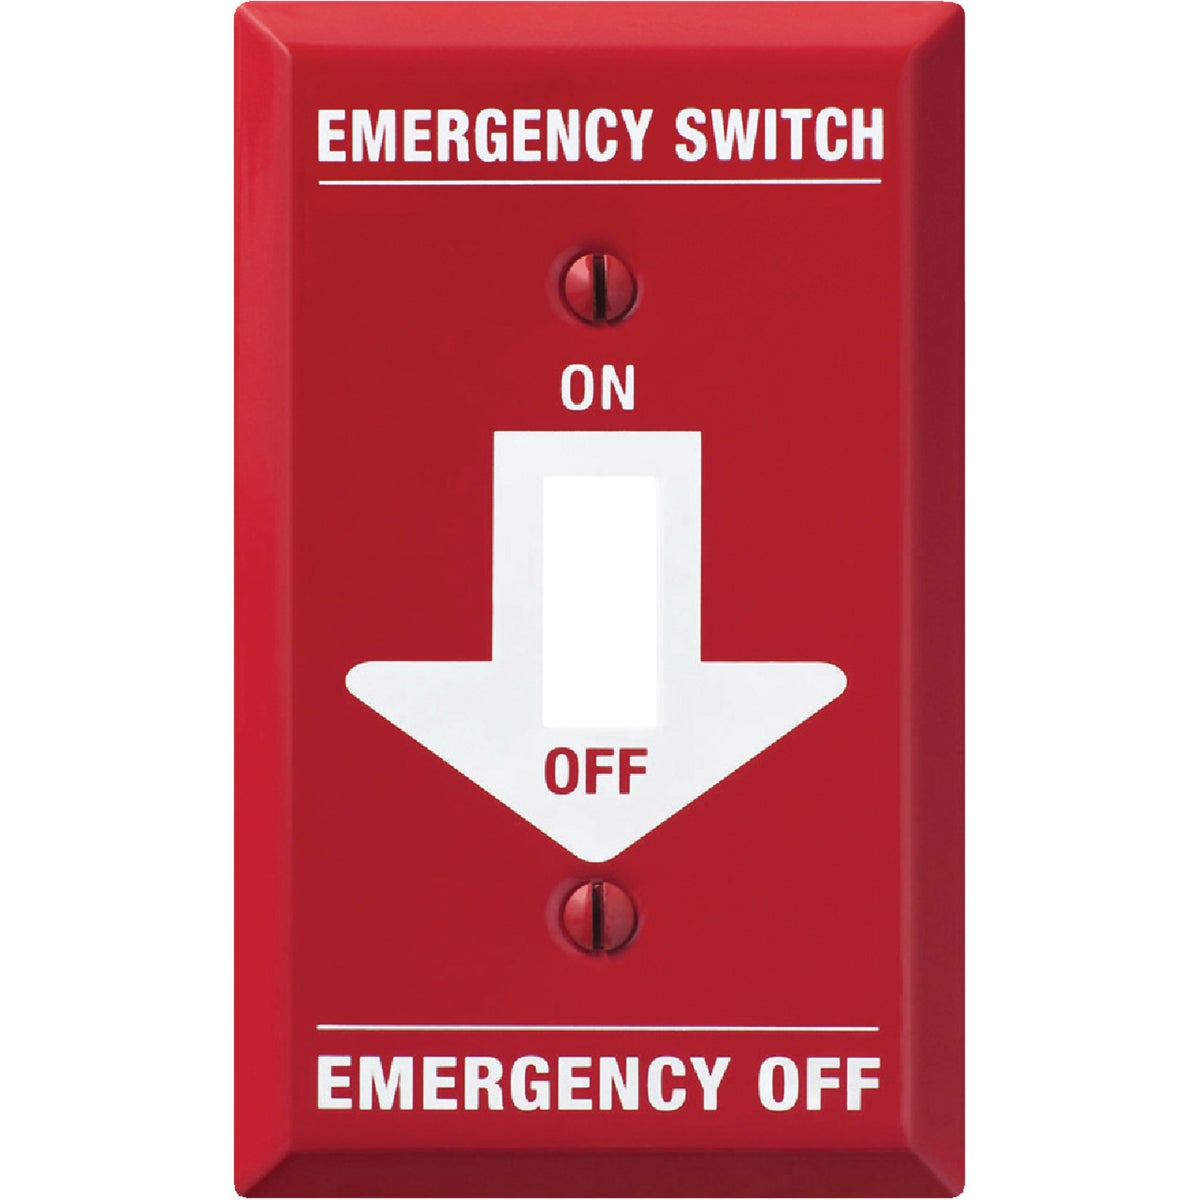 Item 559091, Single toggle emergency switch wall plate.